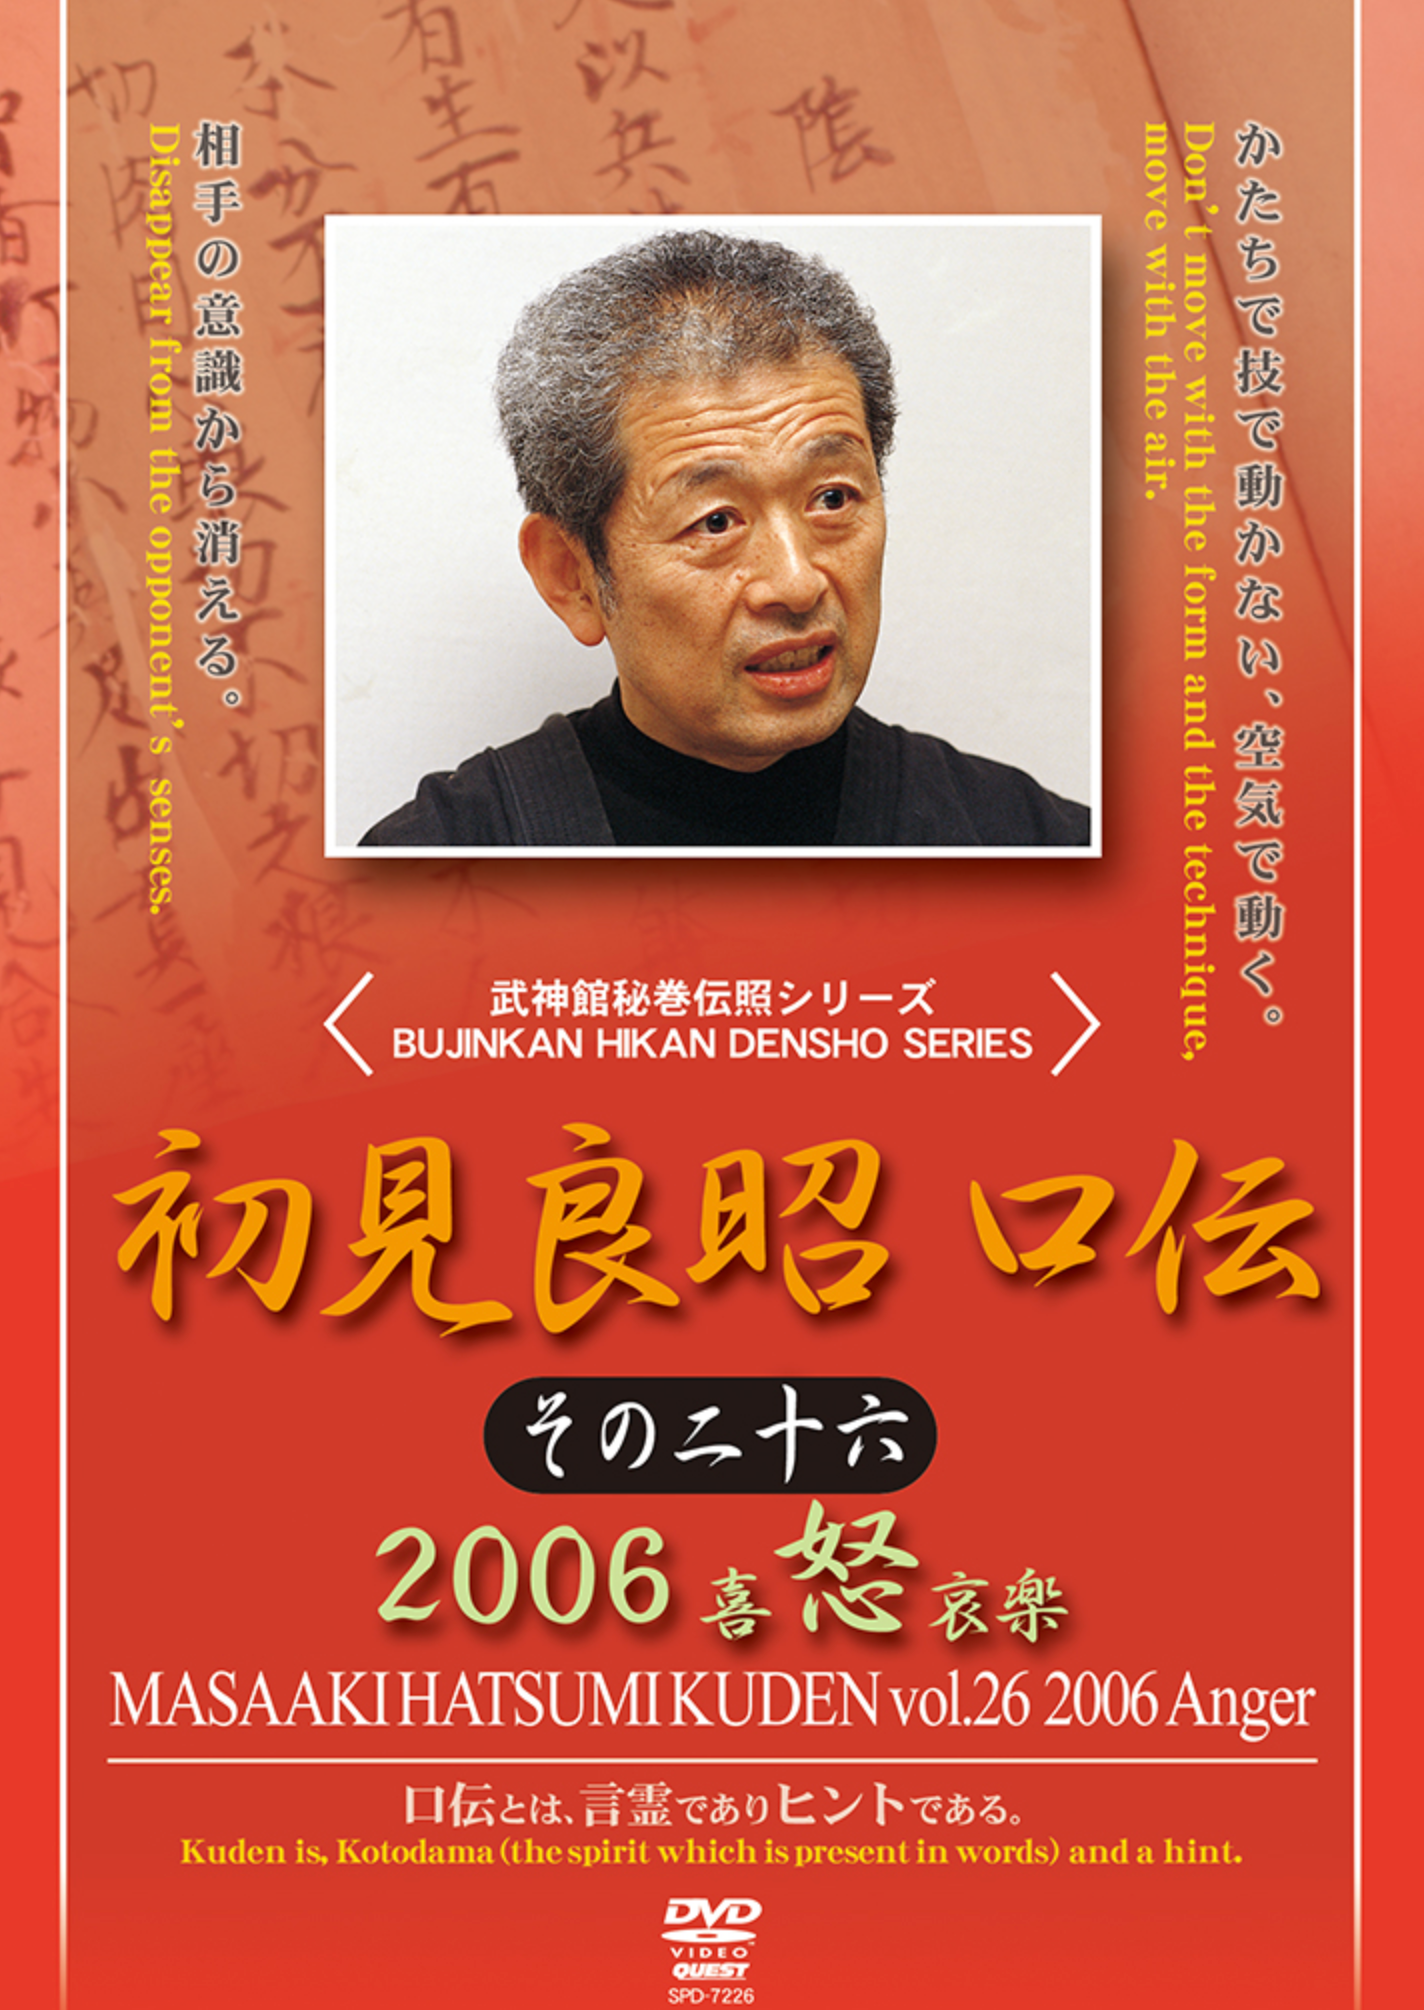 Kuden Vol 26 DVD with Masaaki Hatsumi - Budovideos Inc